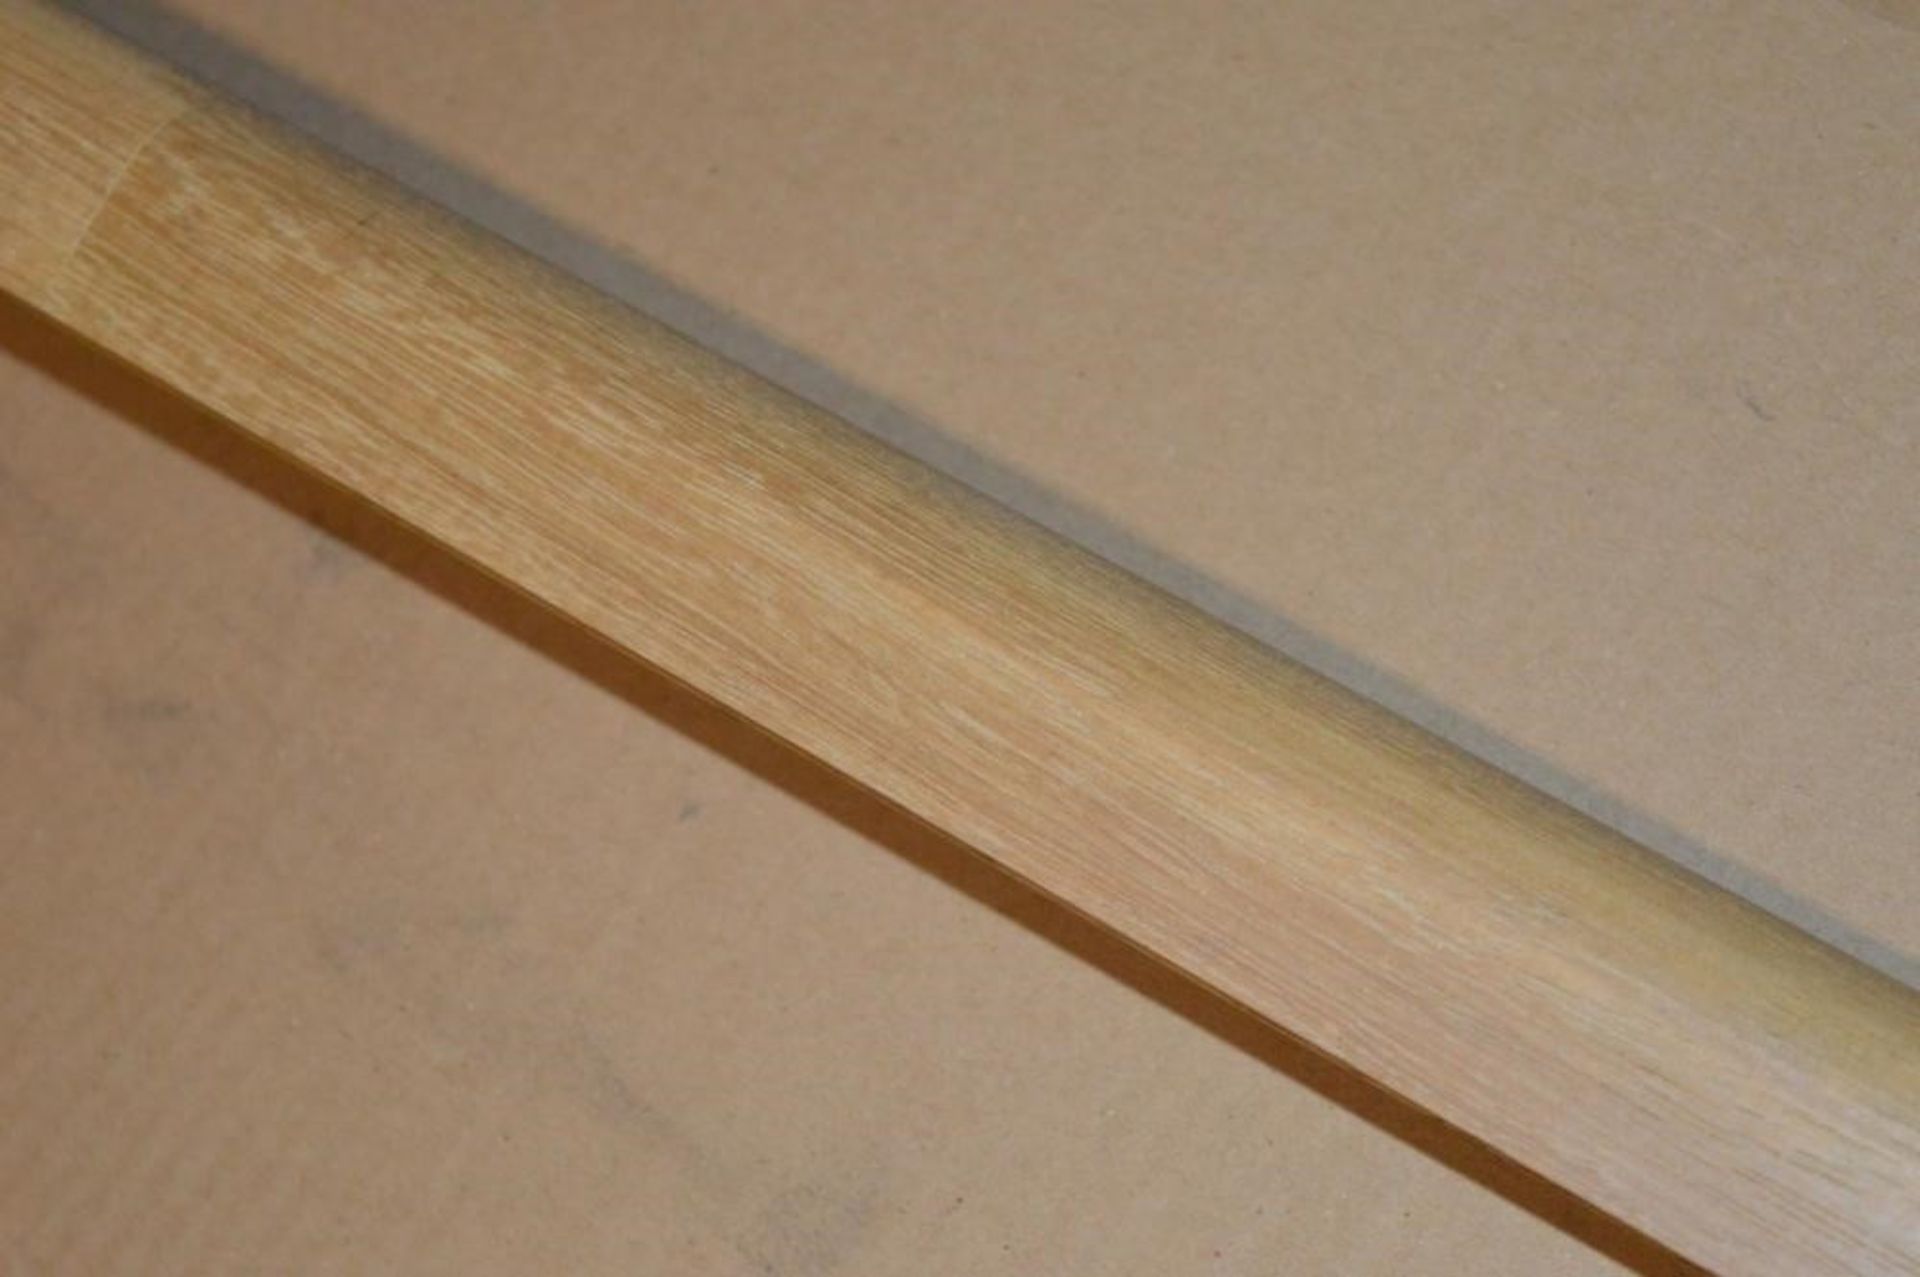 10 x Solid Wood Kitchen Worktop Upstands - BROWN ASH - Size: 3000 x 40 x 18mm (each) - Untreated -